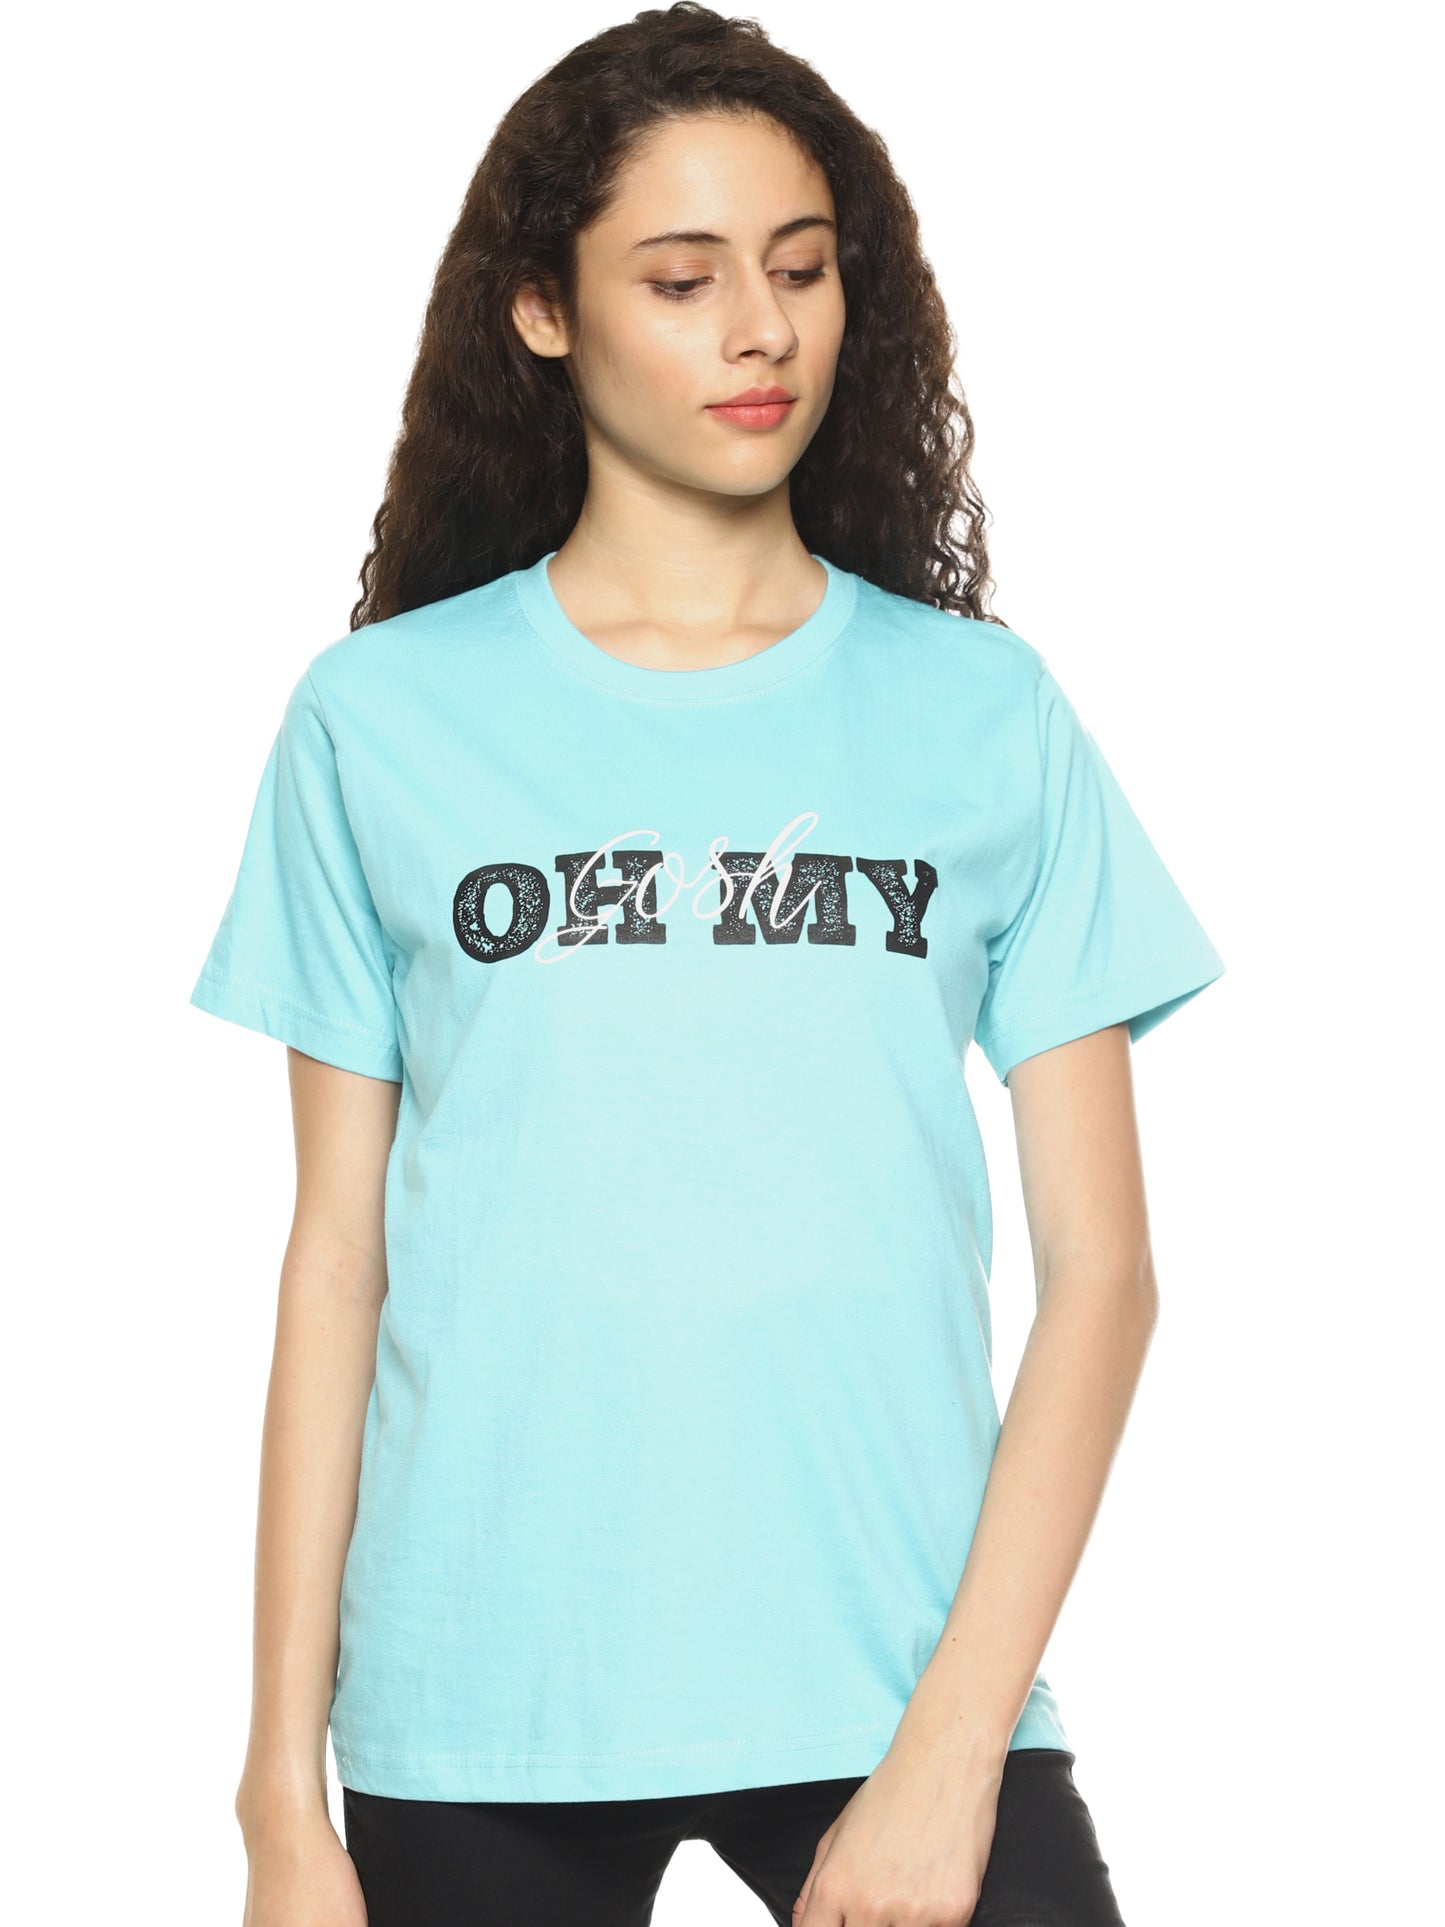 Women's Printed T-shirt(OH MY GHOS)